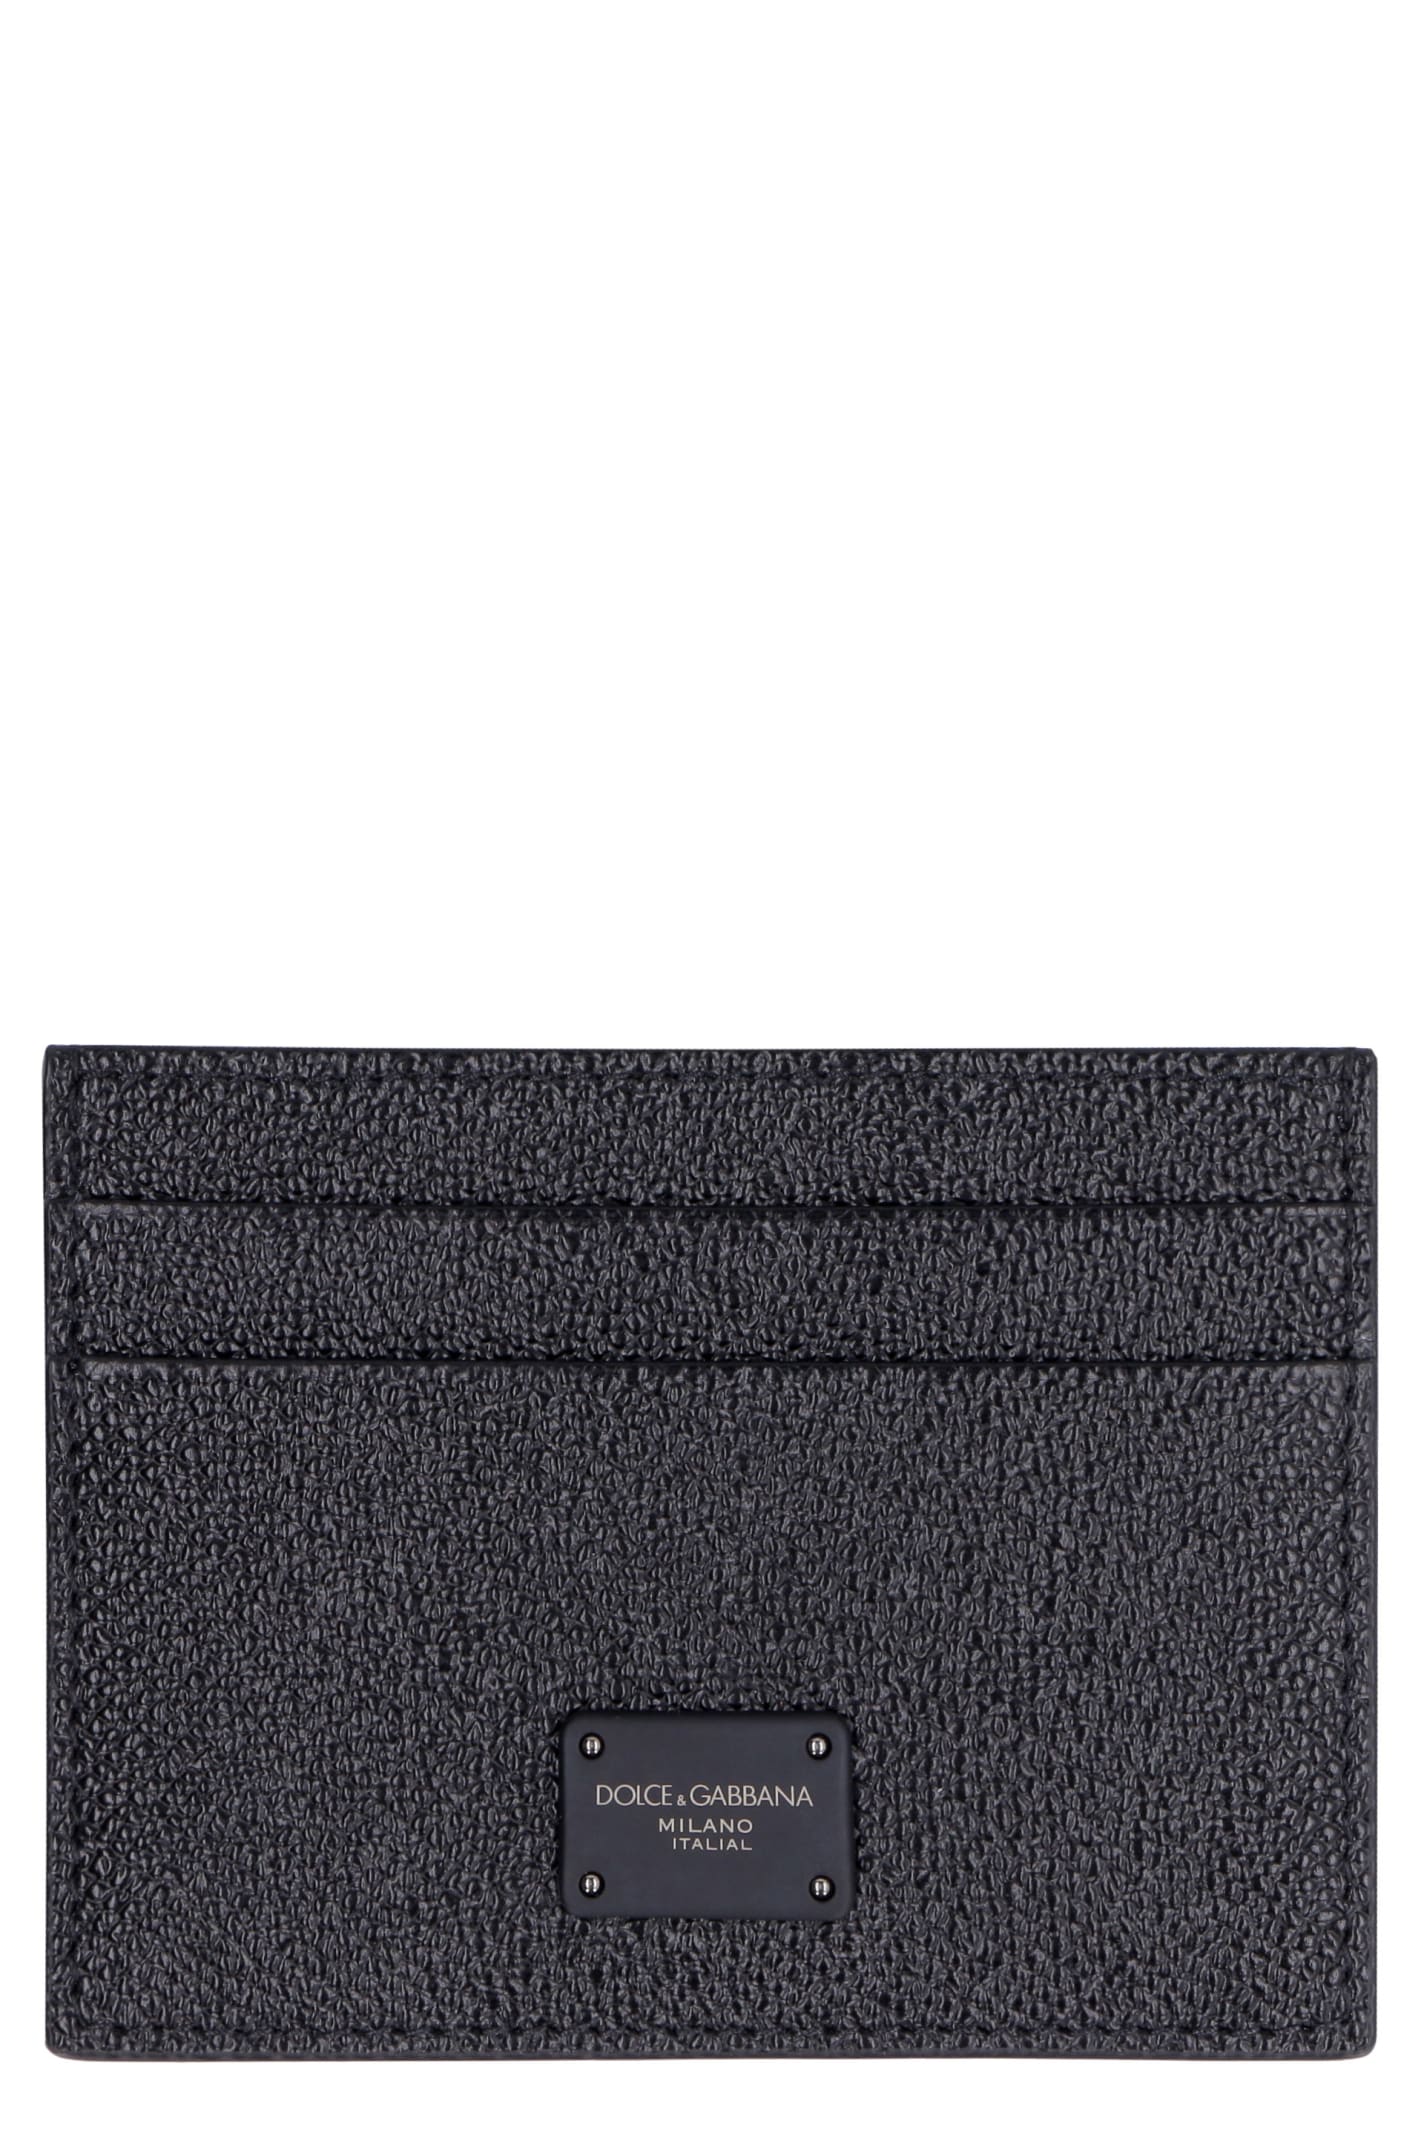 Dolce & Gabbana Dauphine Print Leather Card Holder In Black